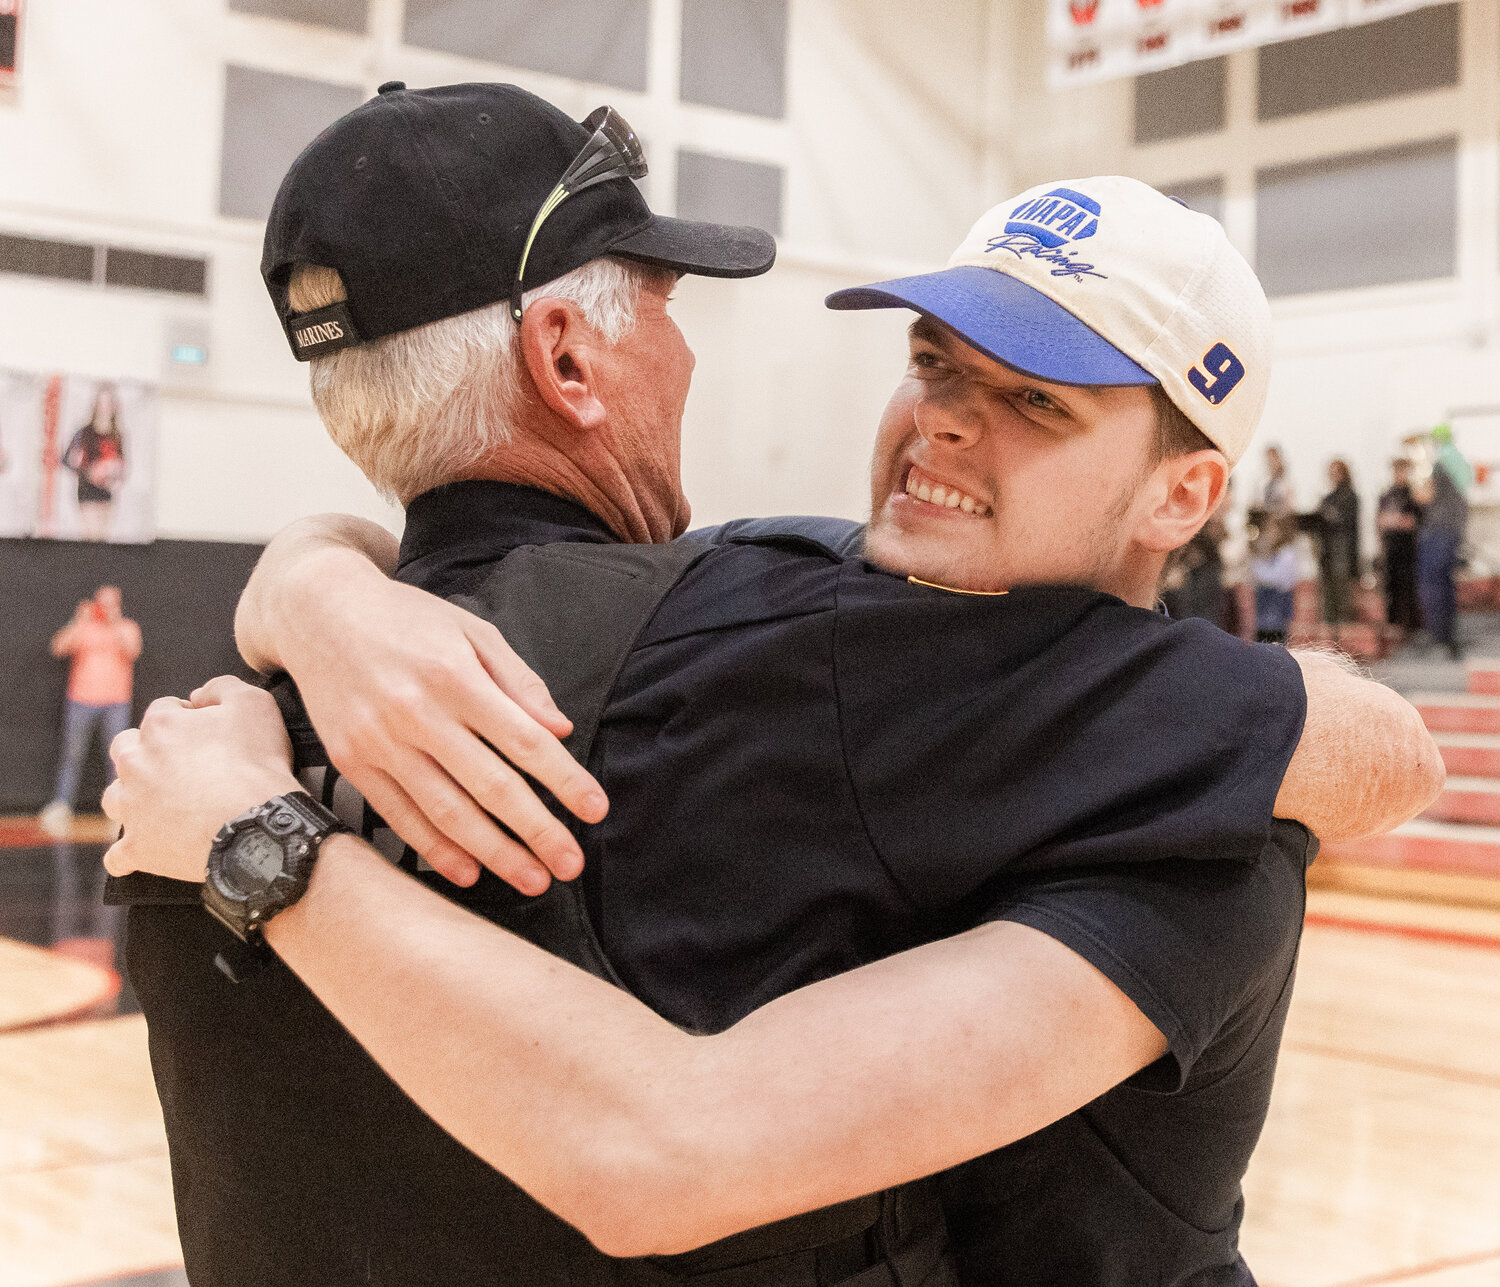 Chris Harvey receives an embrace after sinking a shot to mark 2,000 made half-court buckets at Toledo High School on Thursday, Sept. 21.